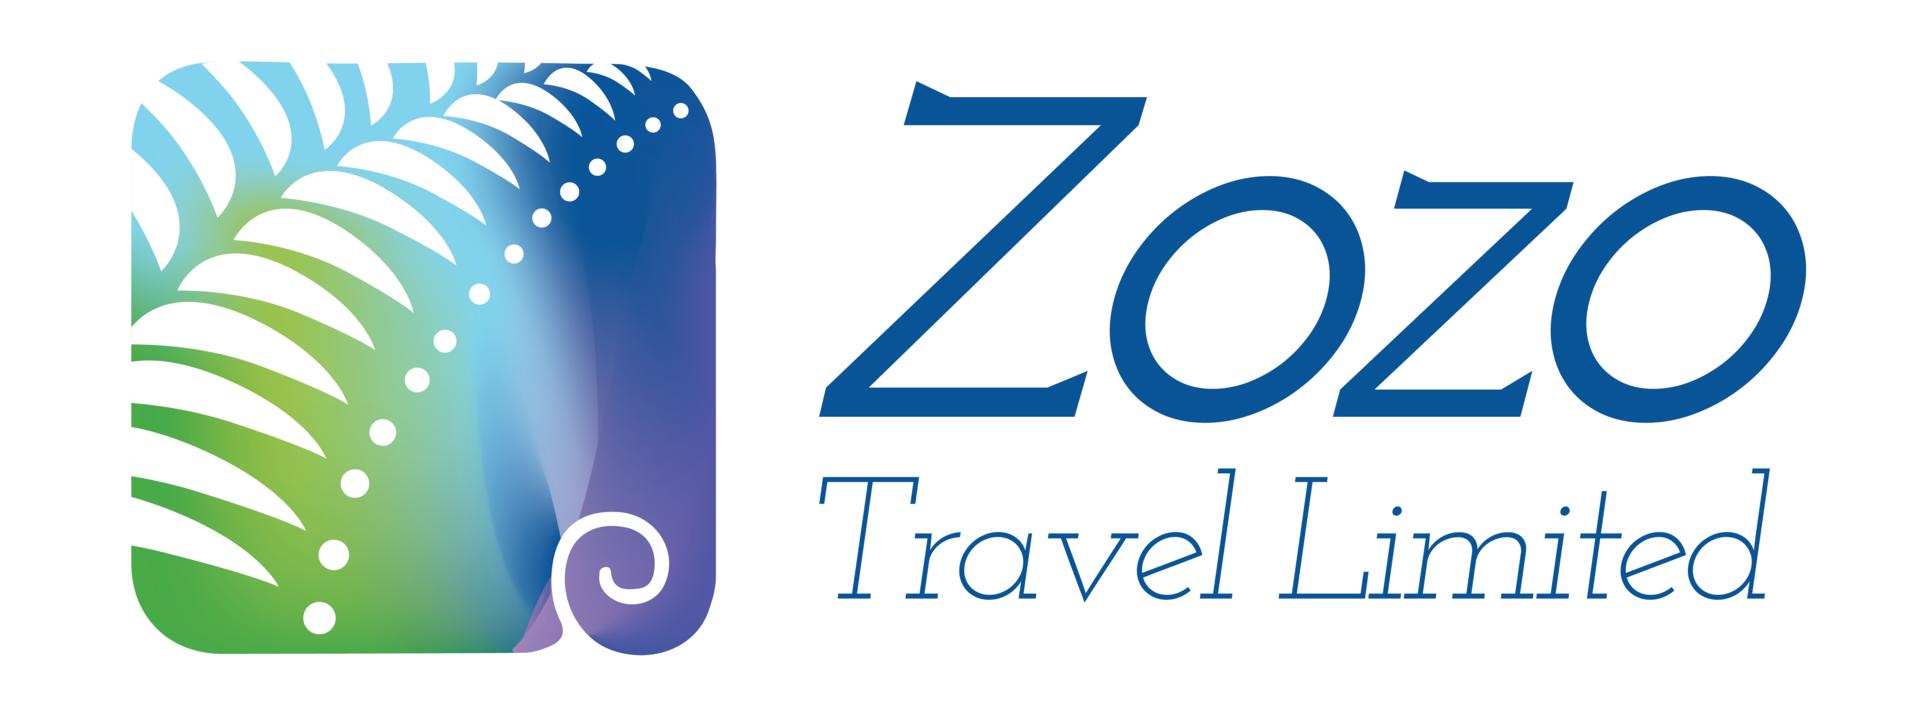 Zozo logo high resolution-01